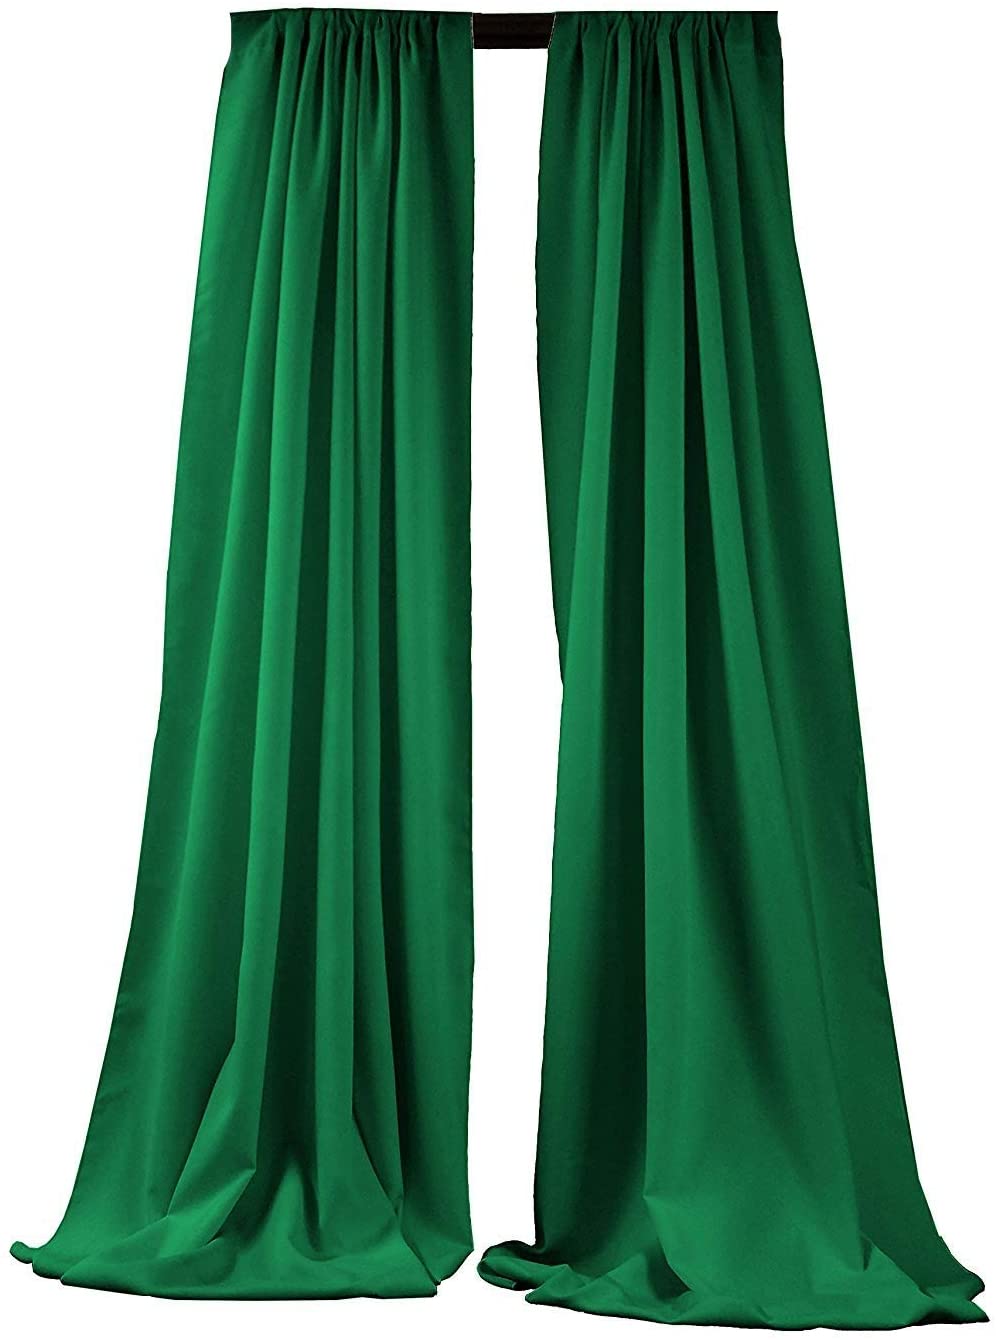 2 Panels 5 Feet Wide Polyester Seamless Backdrop Drape Curtain Panel - (Emerald Green,